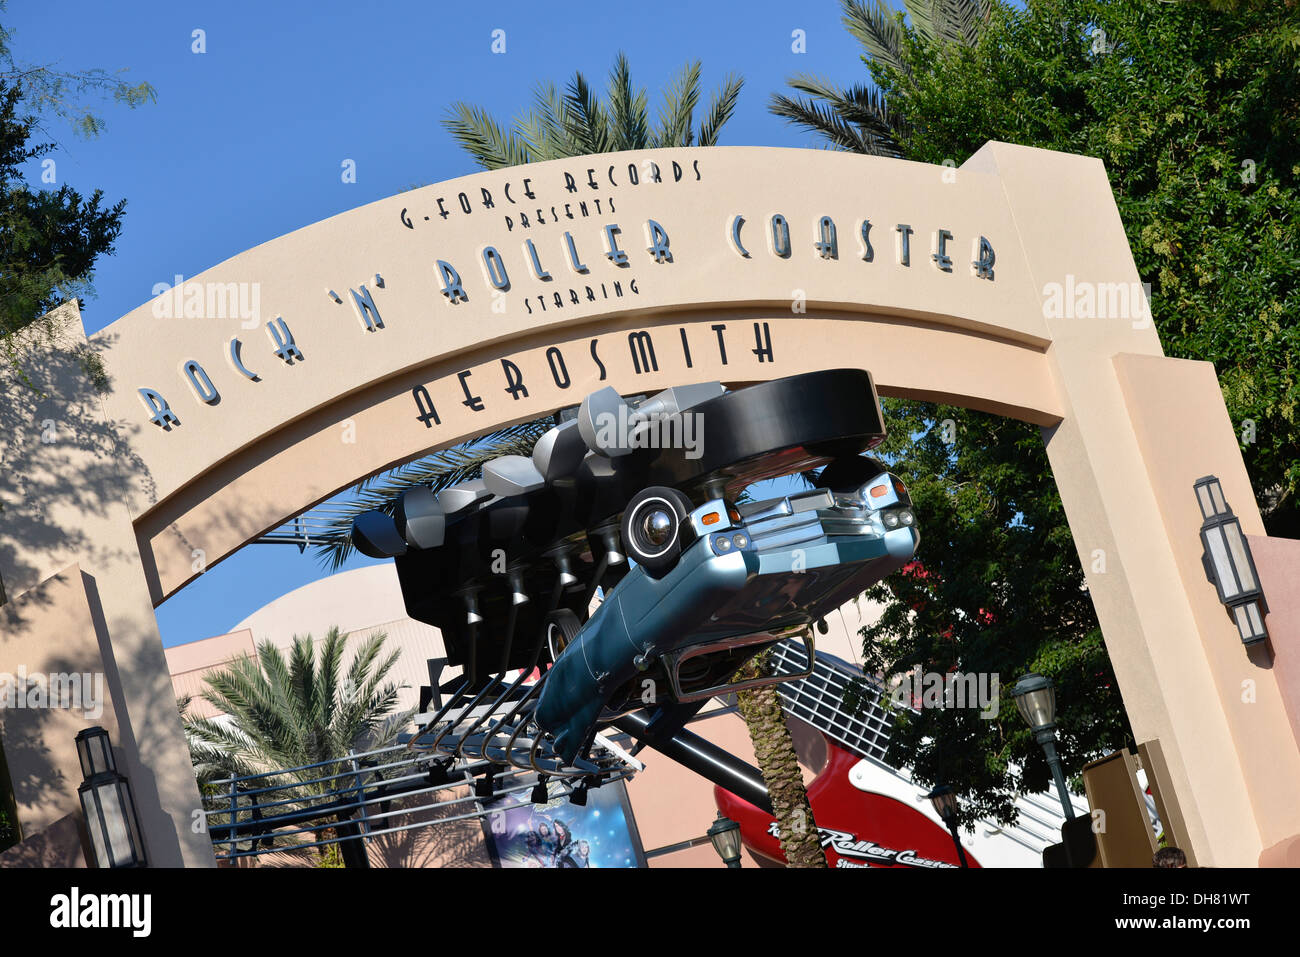 Rock 'n' Roller Coaster - Disney's Hollywood Studios Walt Disney World 